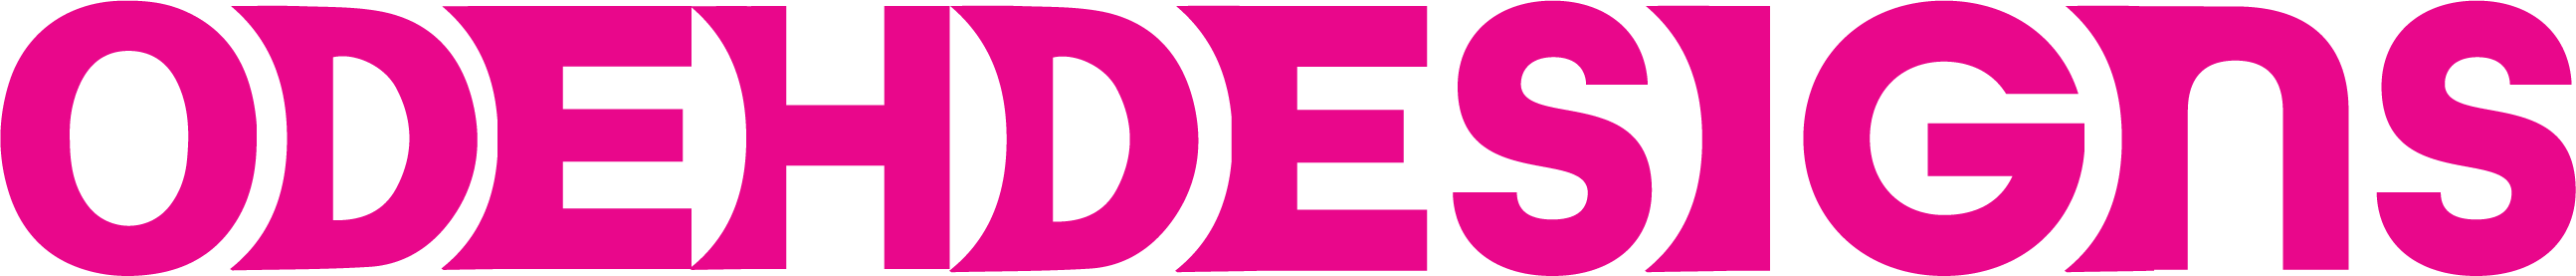 Odeh Designs logo